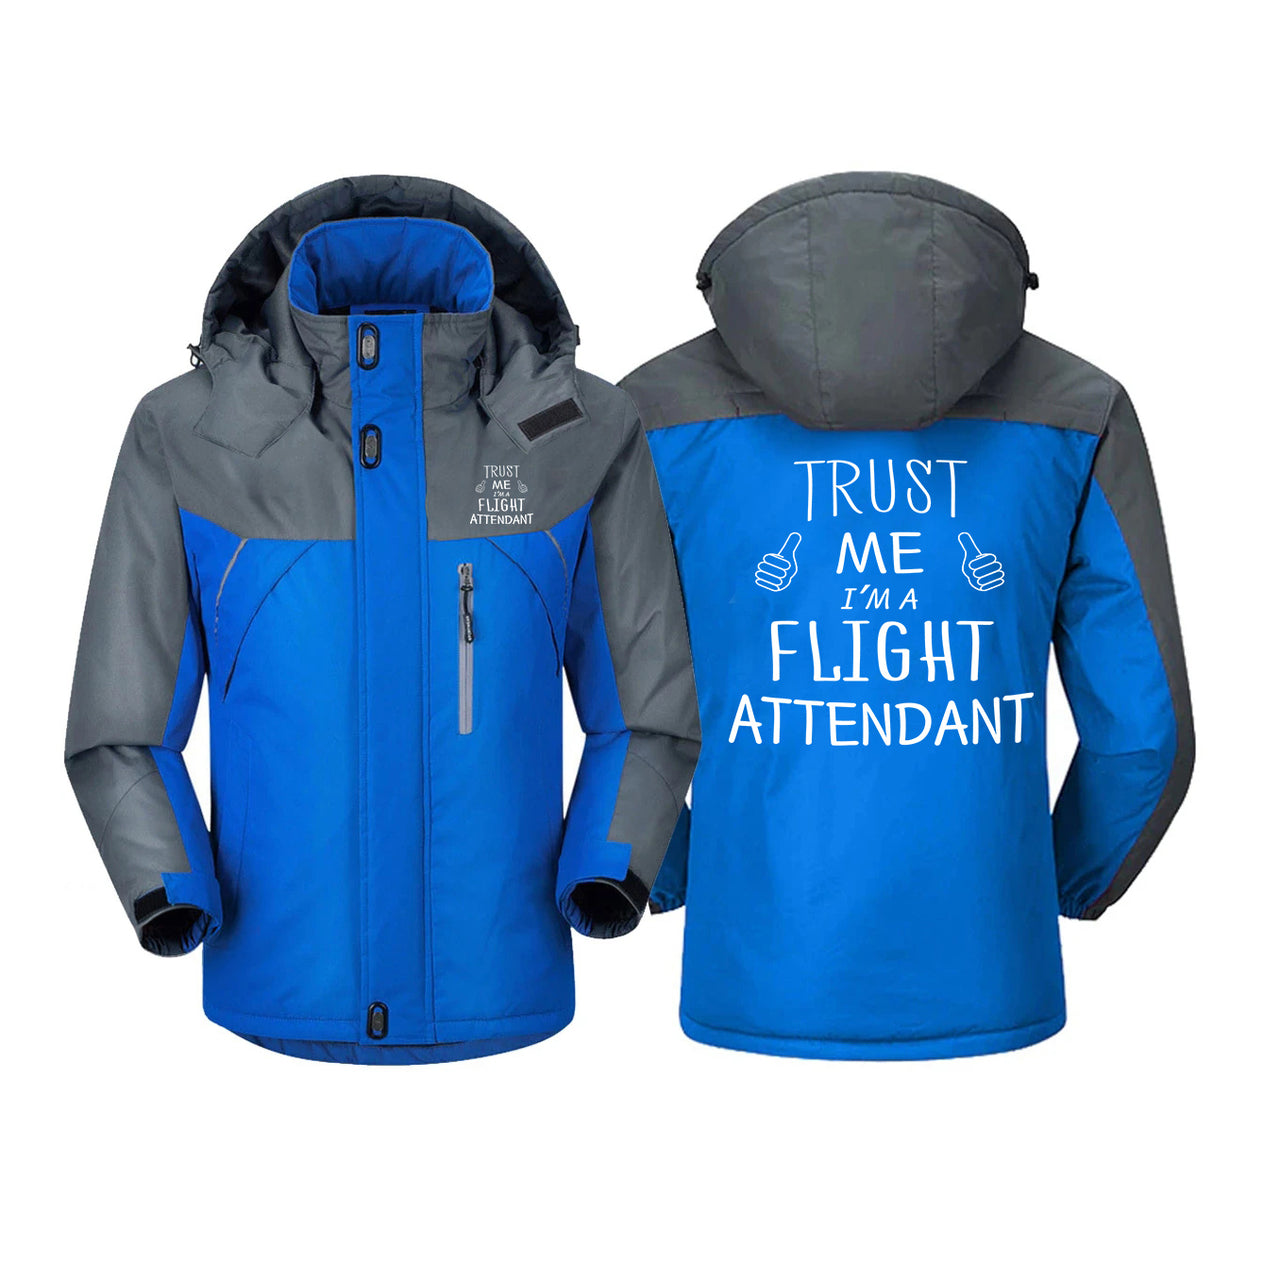 Trust Me I'm a Flight Attendant Designed Thick Winter Jackets